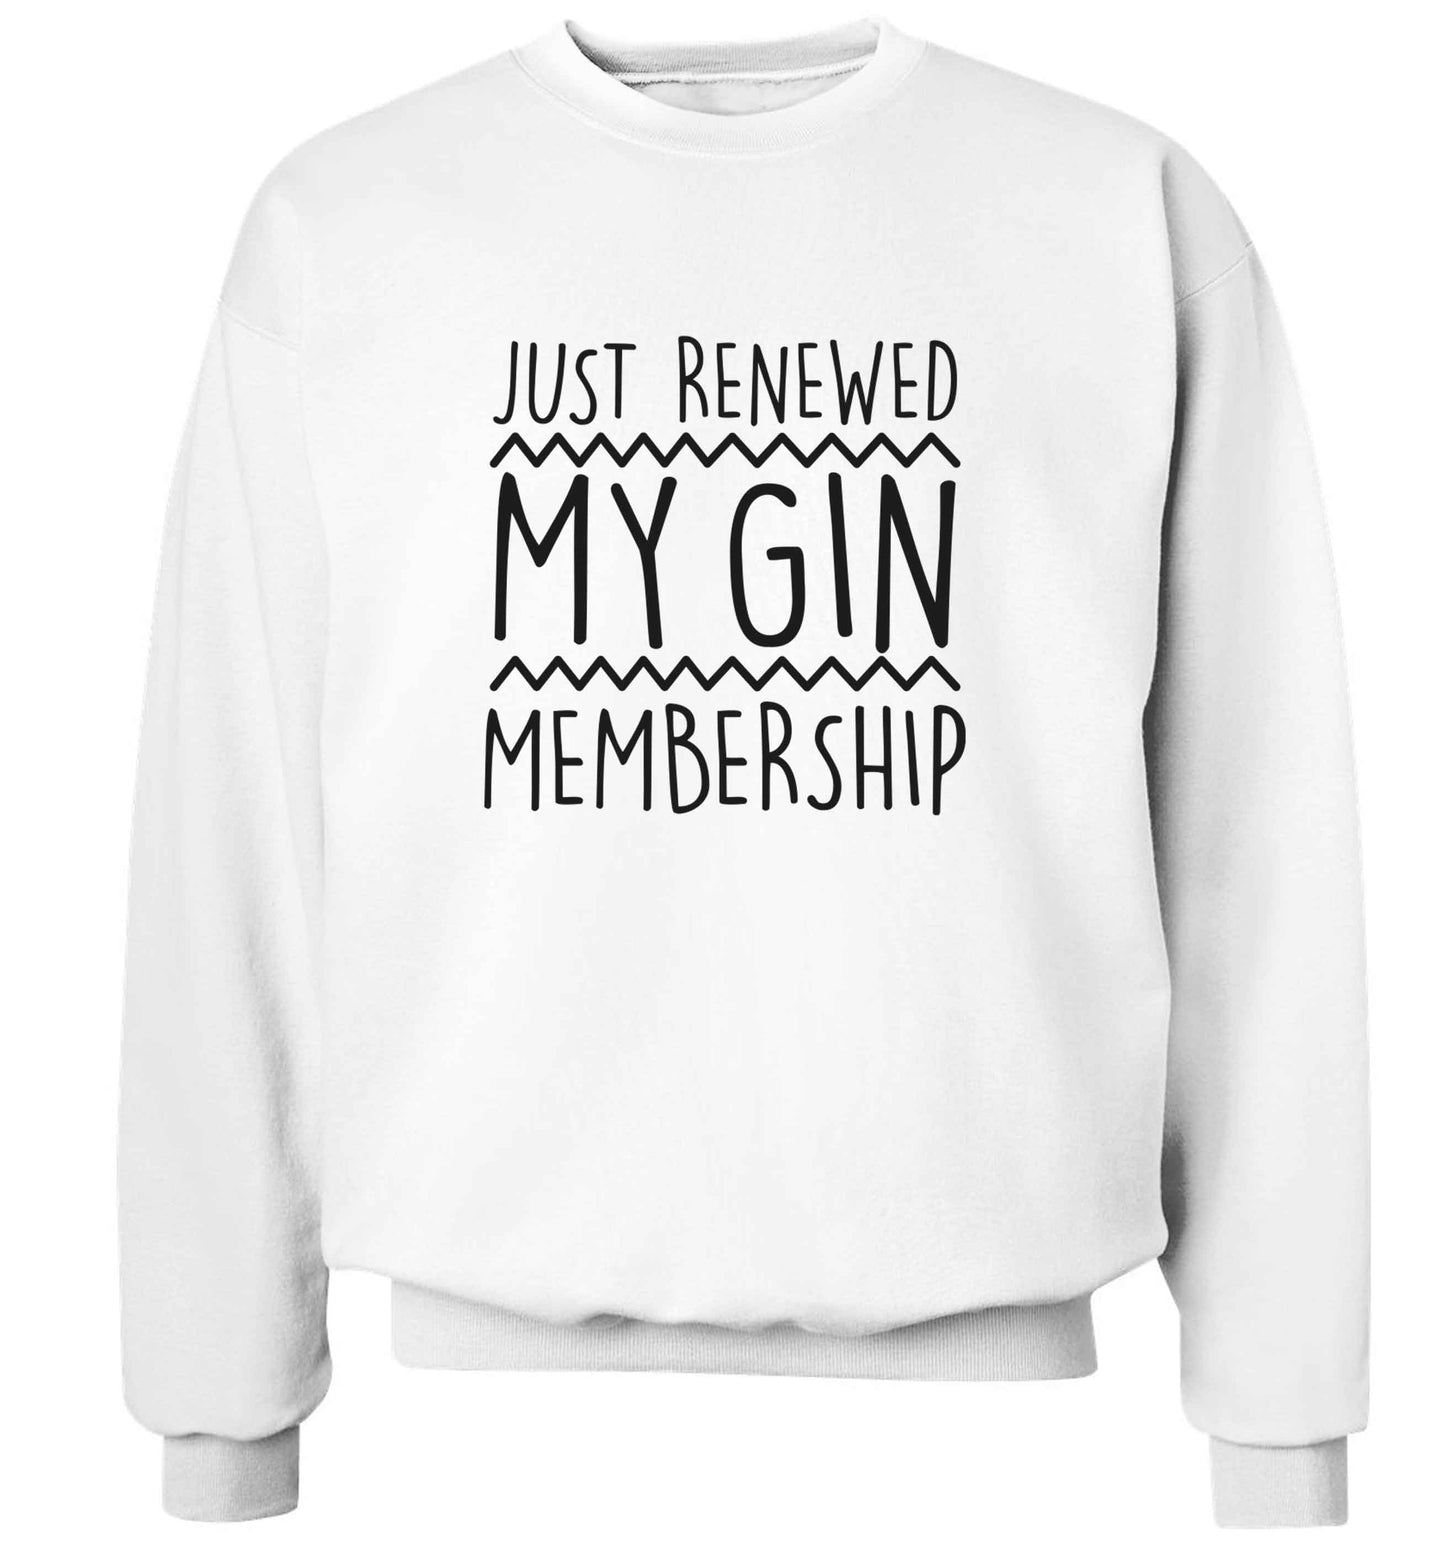 Just renewed my gin membership adult's unisex white sweater 2XL